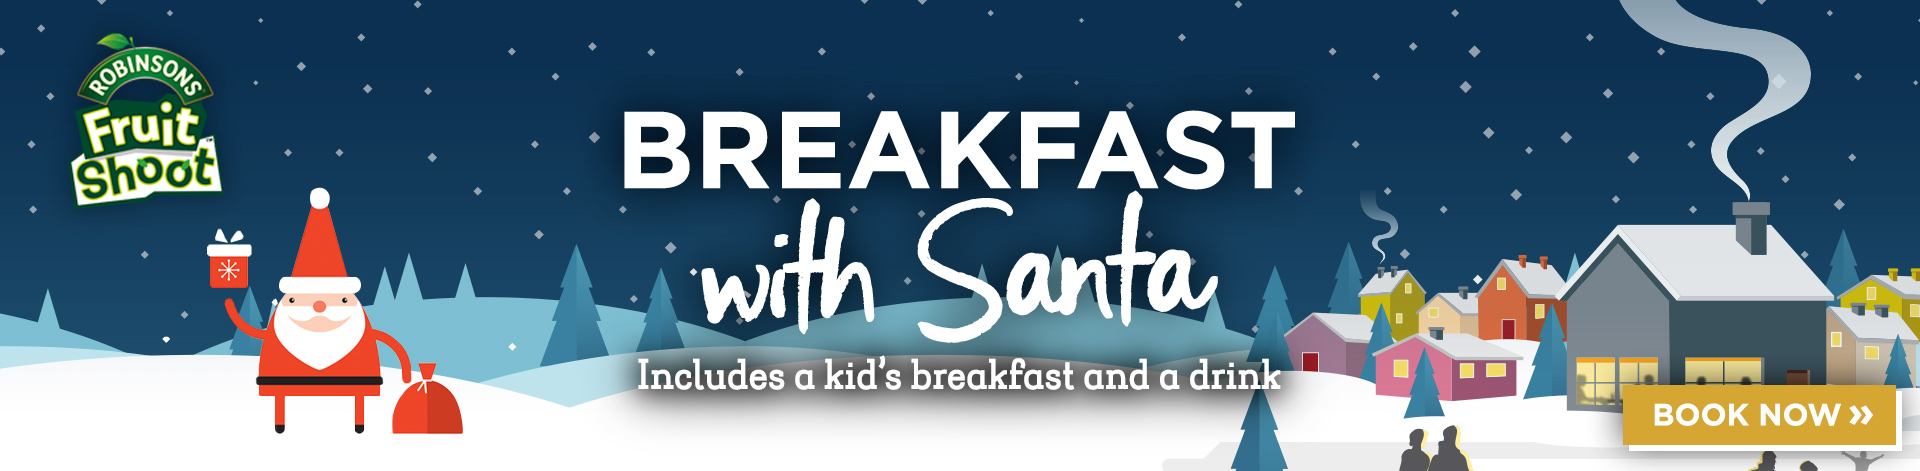 Breakfast with Santa menu at The Fox